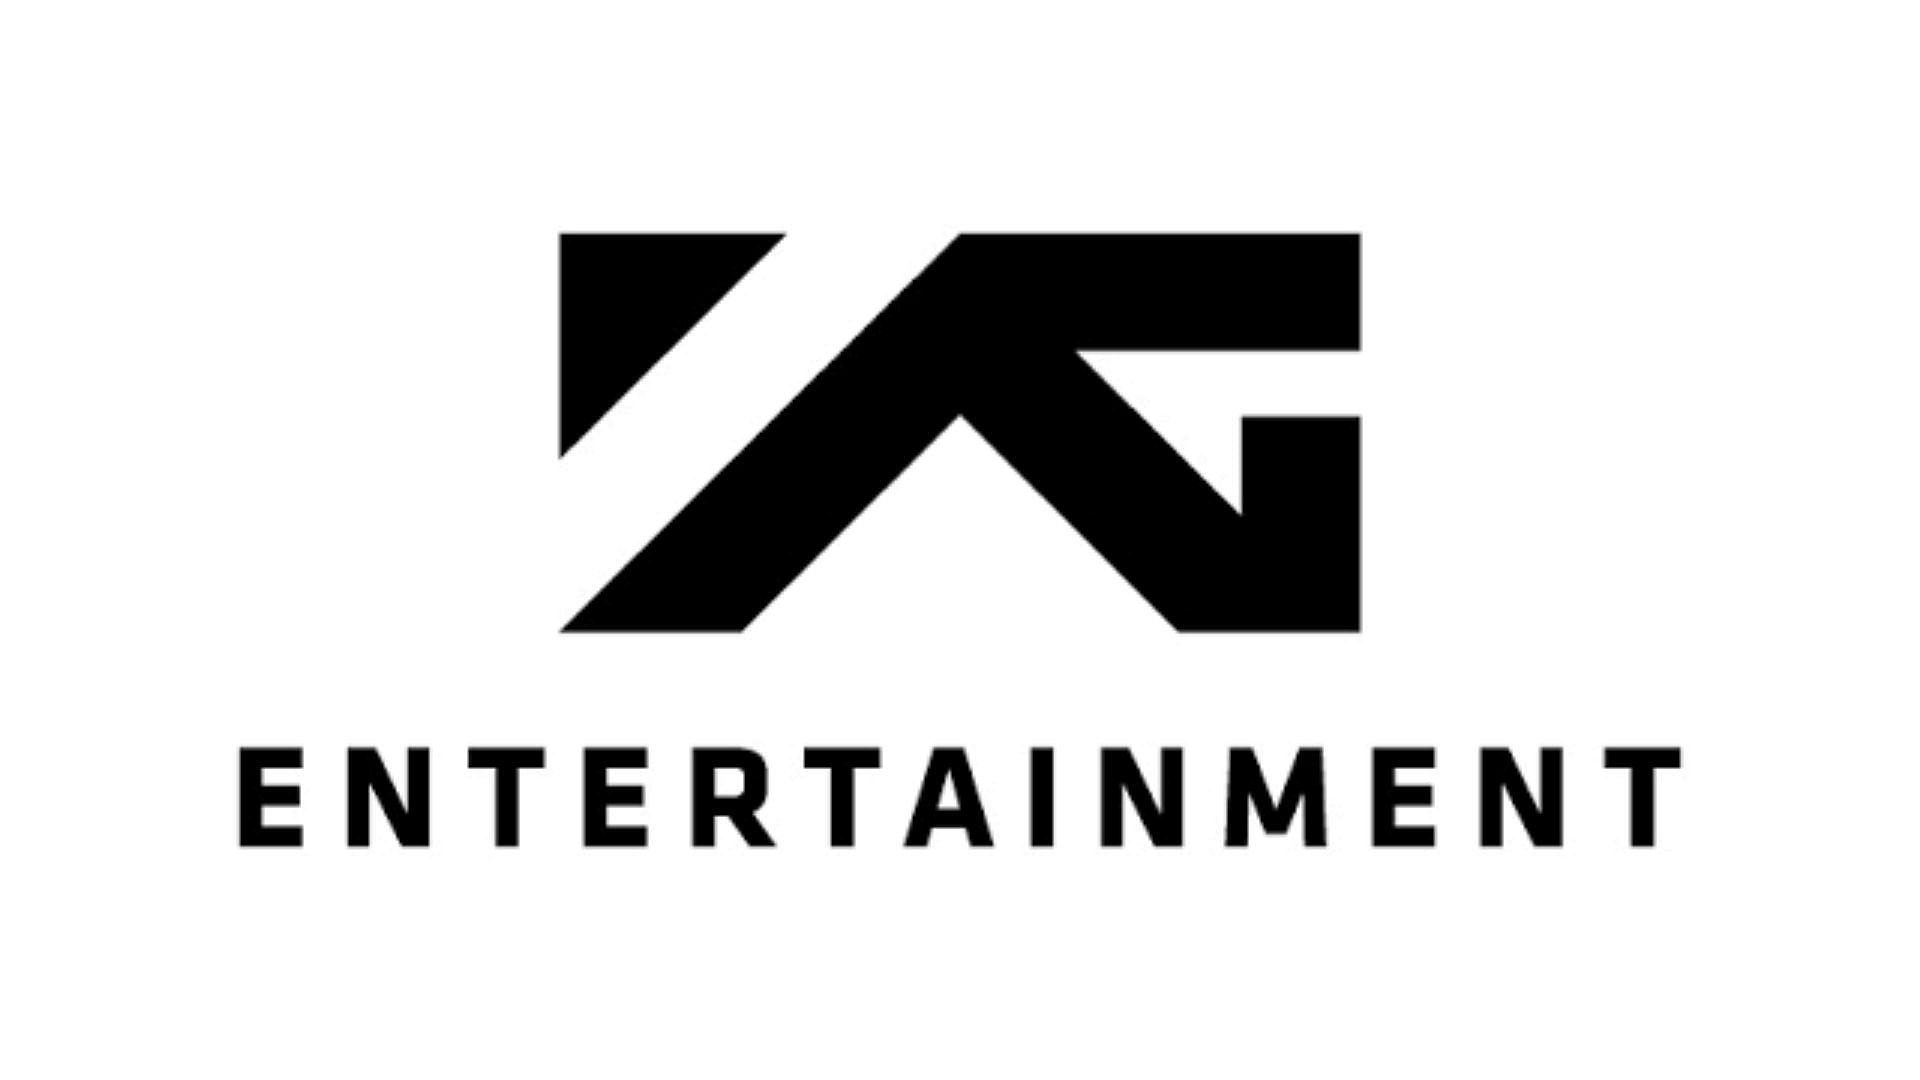 YG Entertainment logo (Image via Wikimedia Commons)